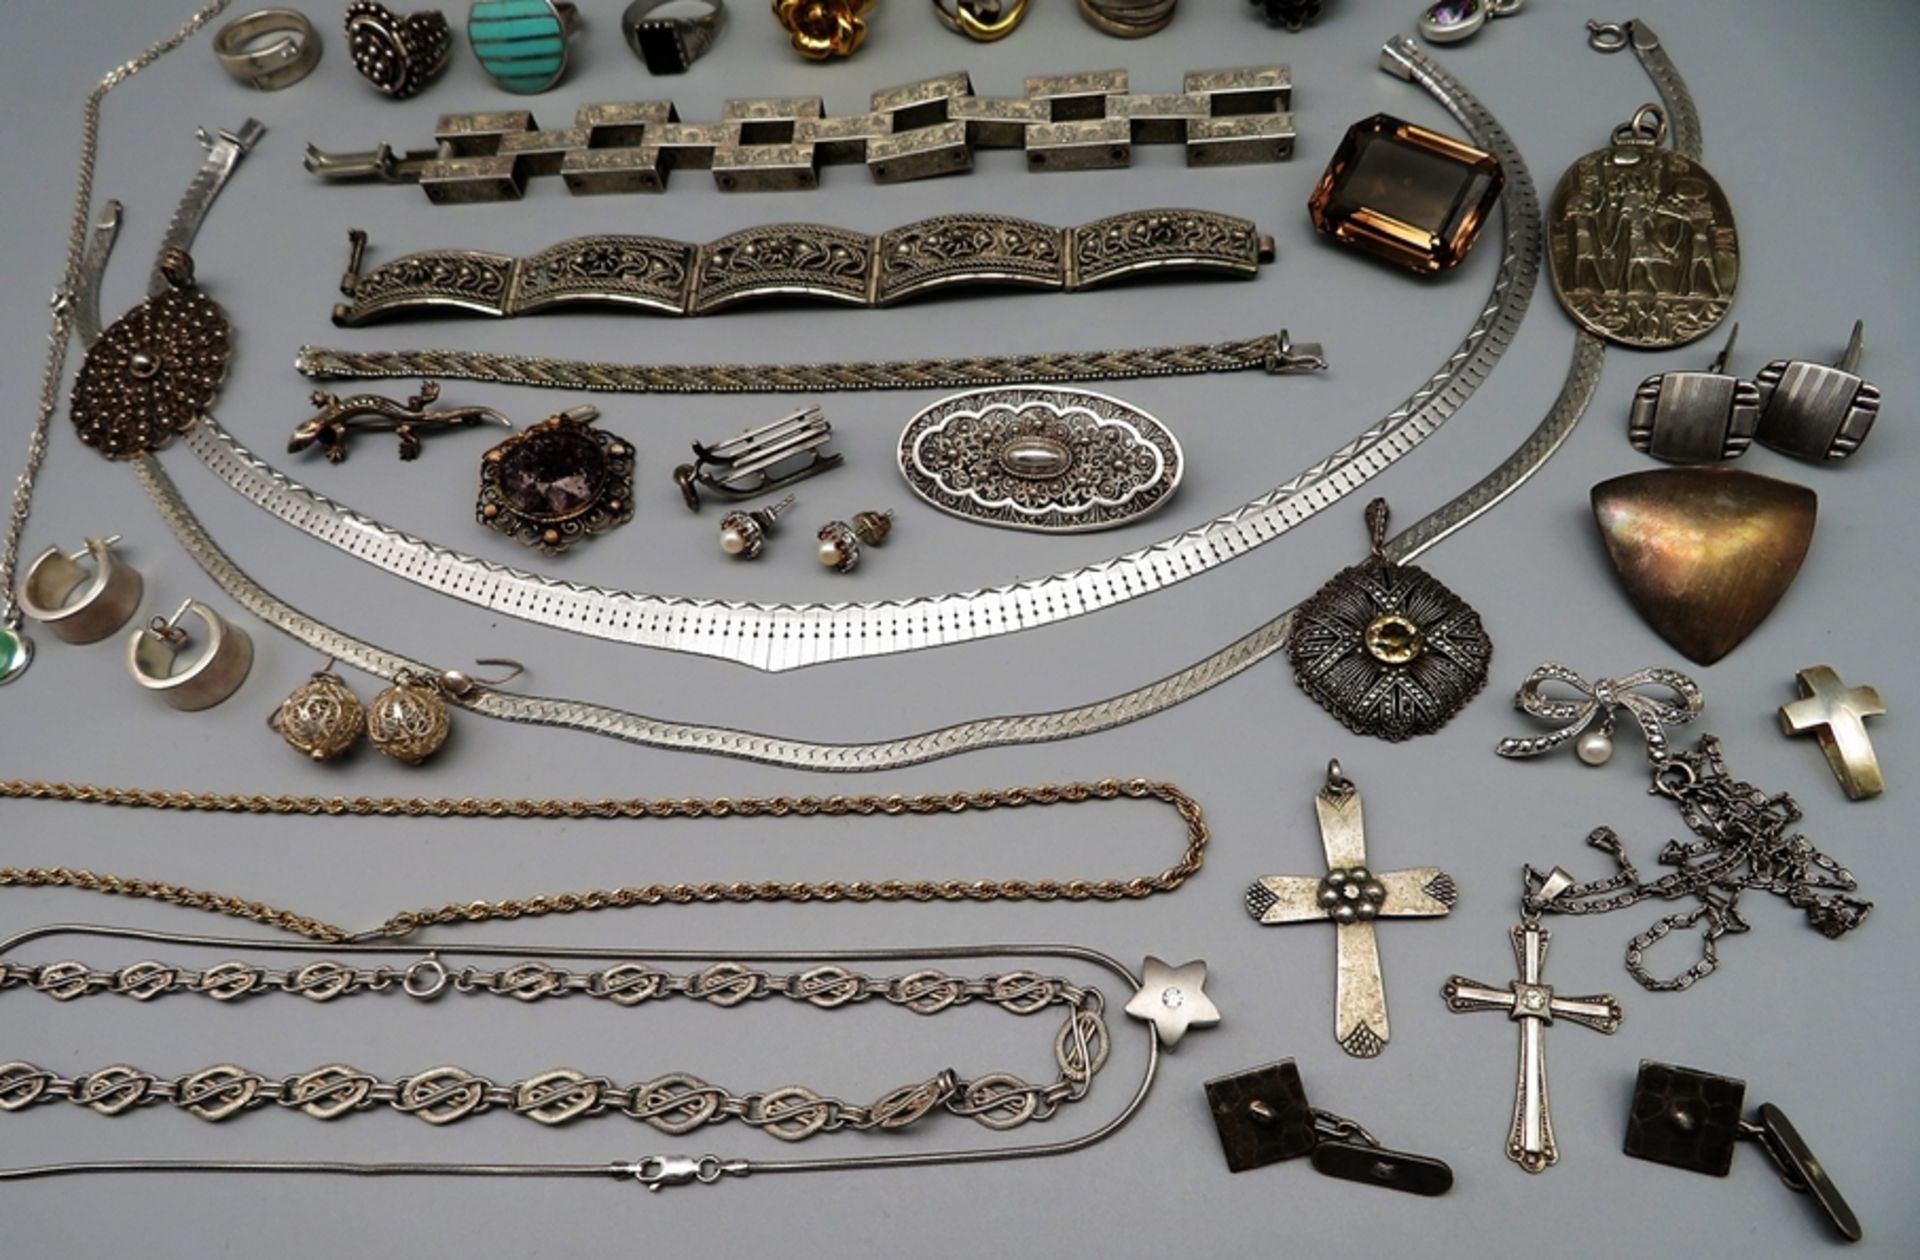 Großes Konvolut Silberschmuck, bestehend aus Ketten, Anhänger, Armbändern, Ringen, Broschen, Mansch - Image 3 of 3